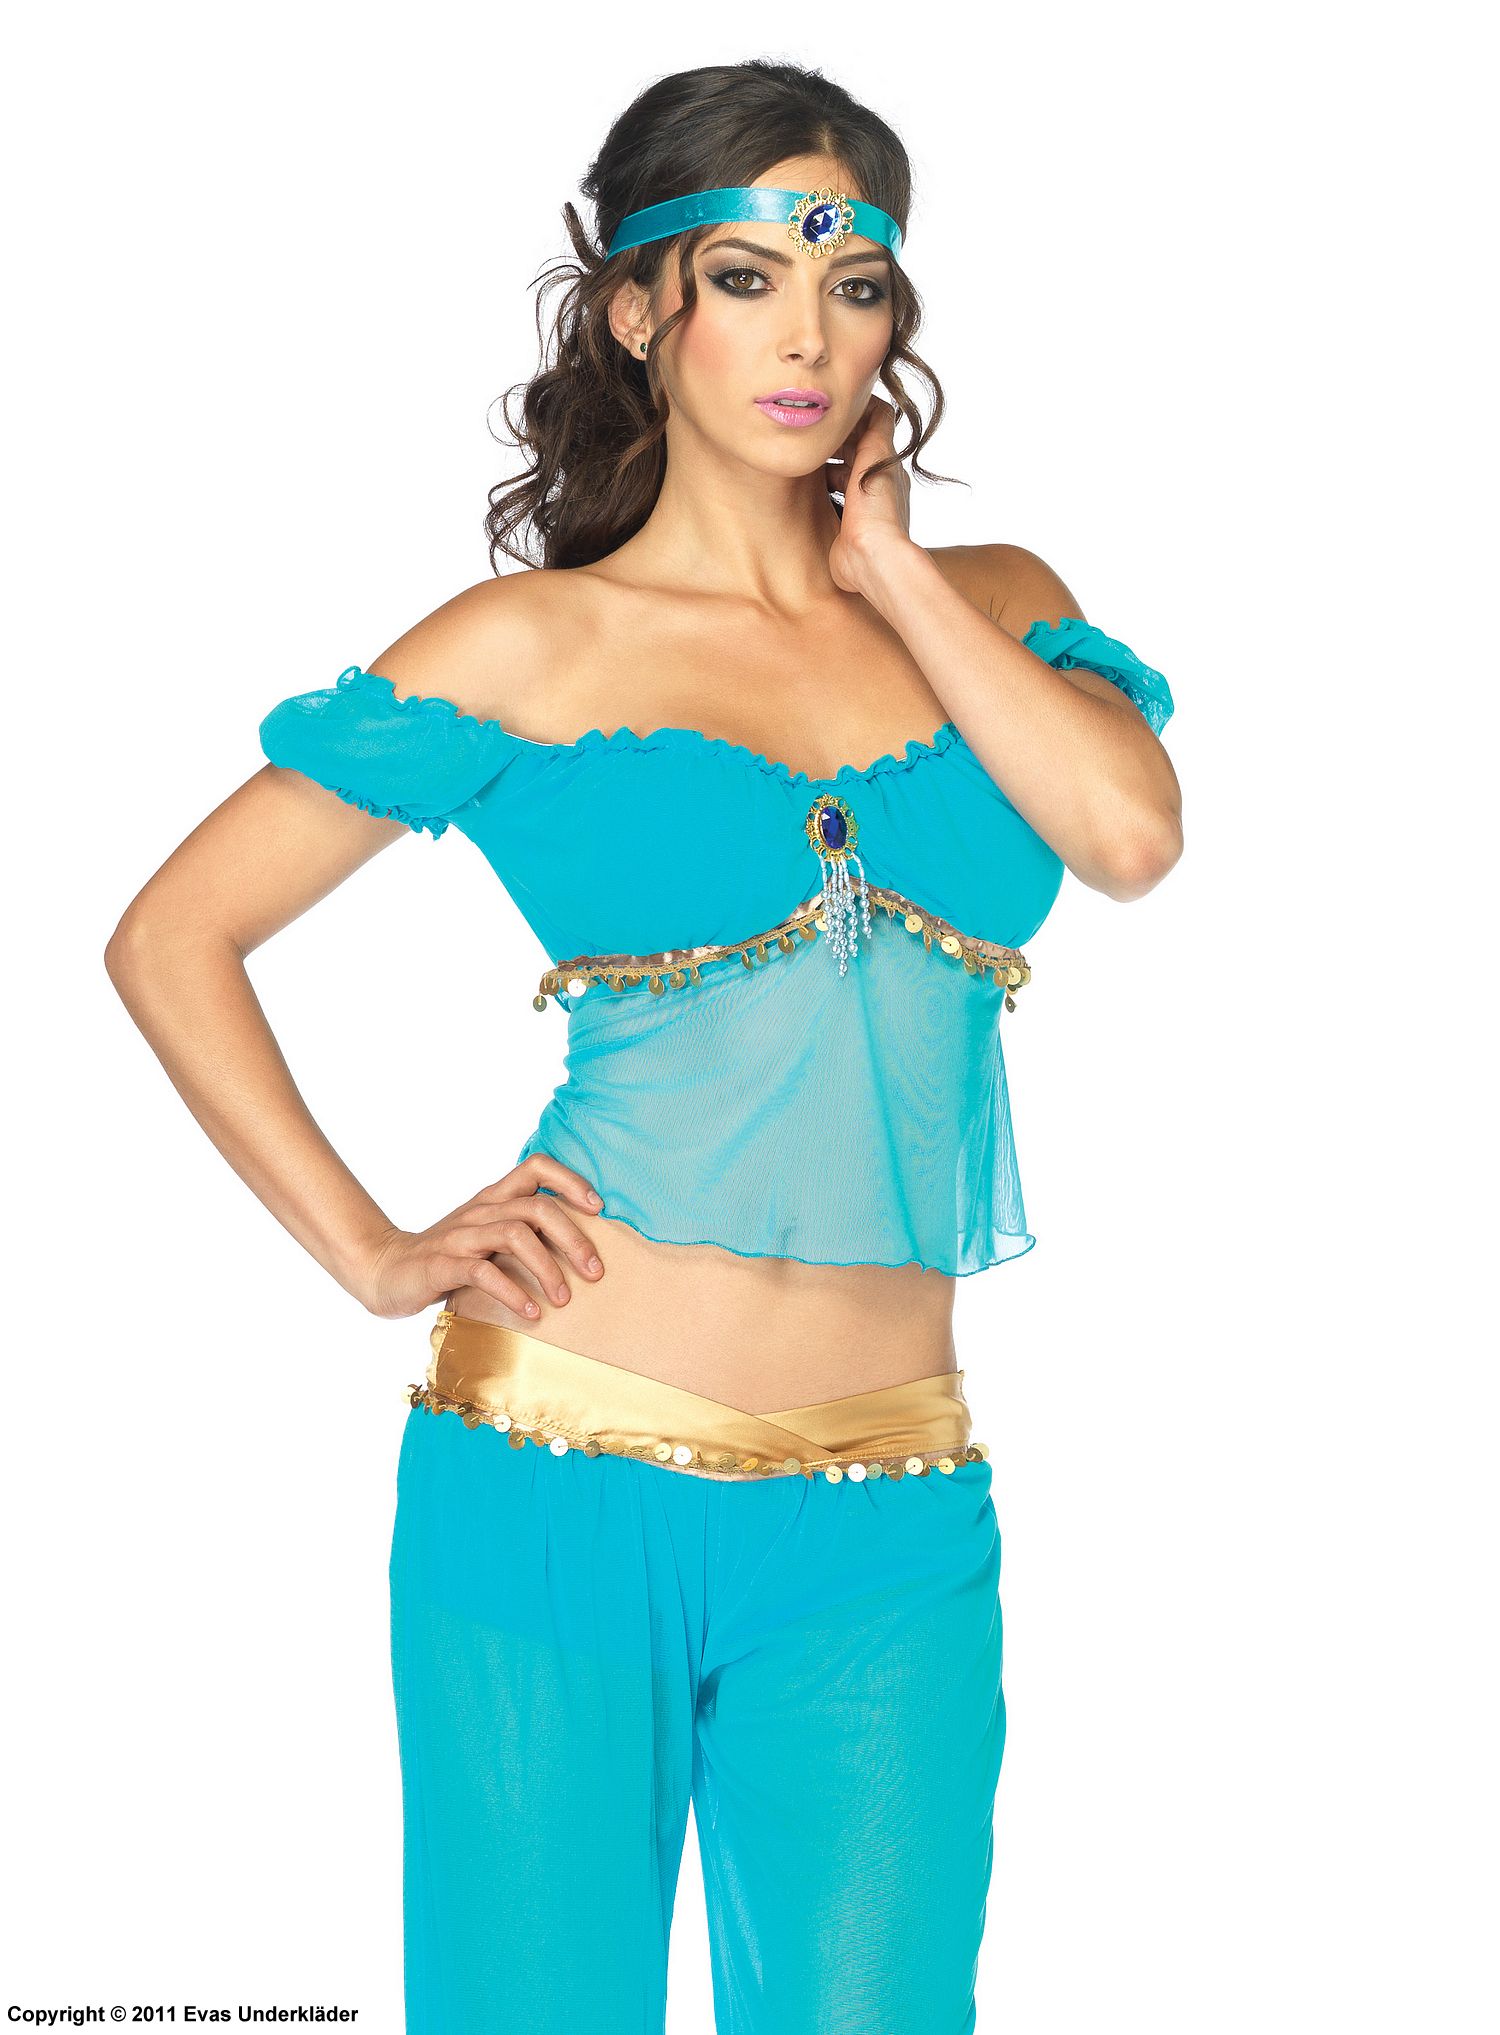 Princess Jasmine from Aladdin, costume top and leggings, rhinestones, off shoulder